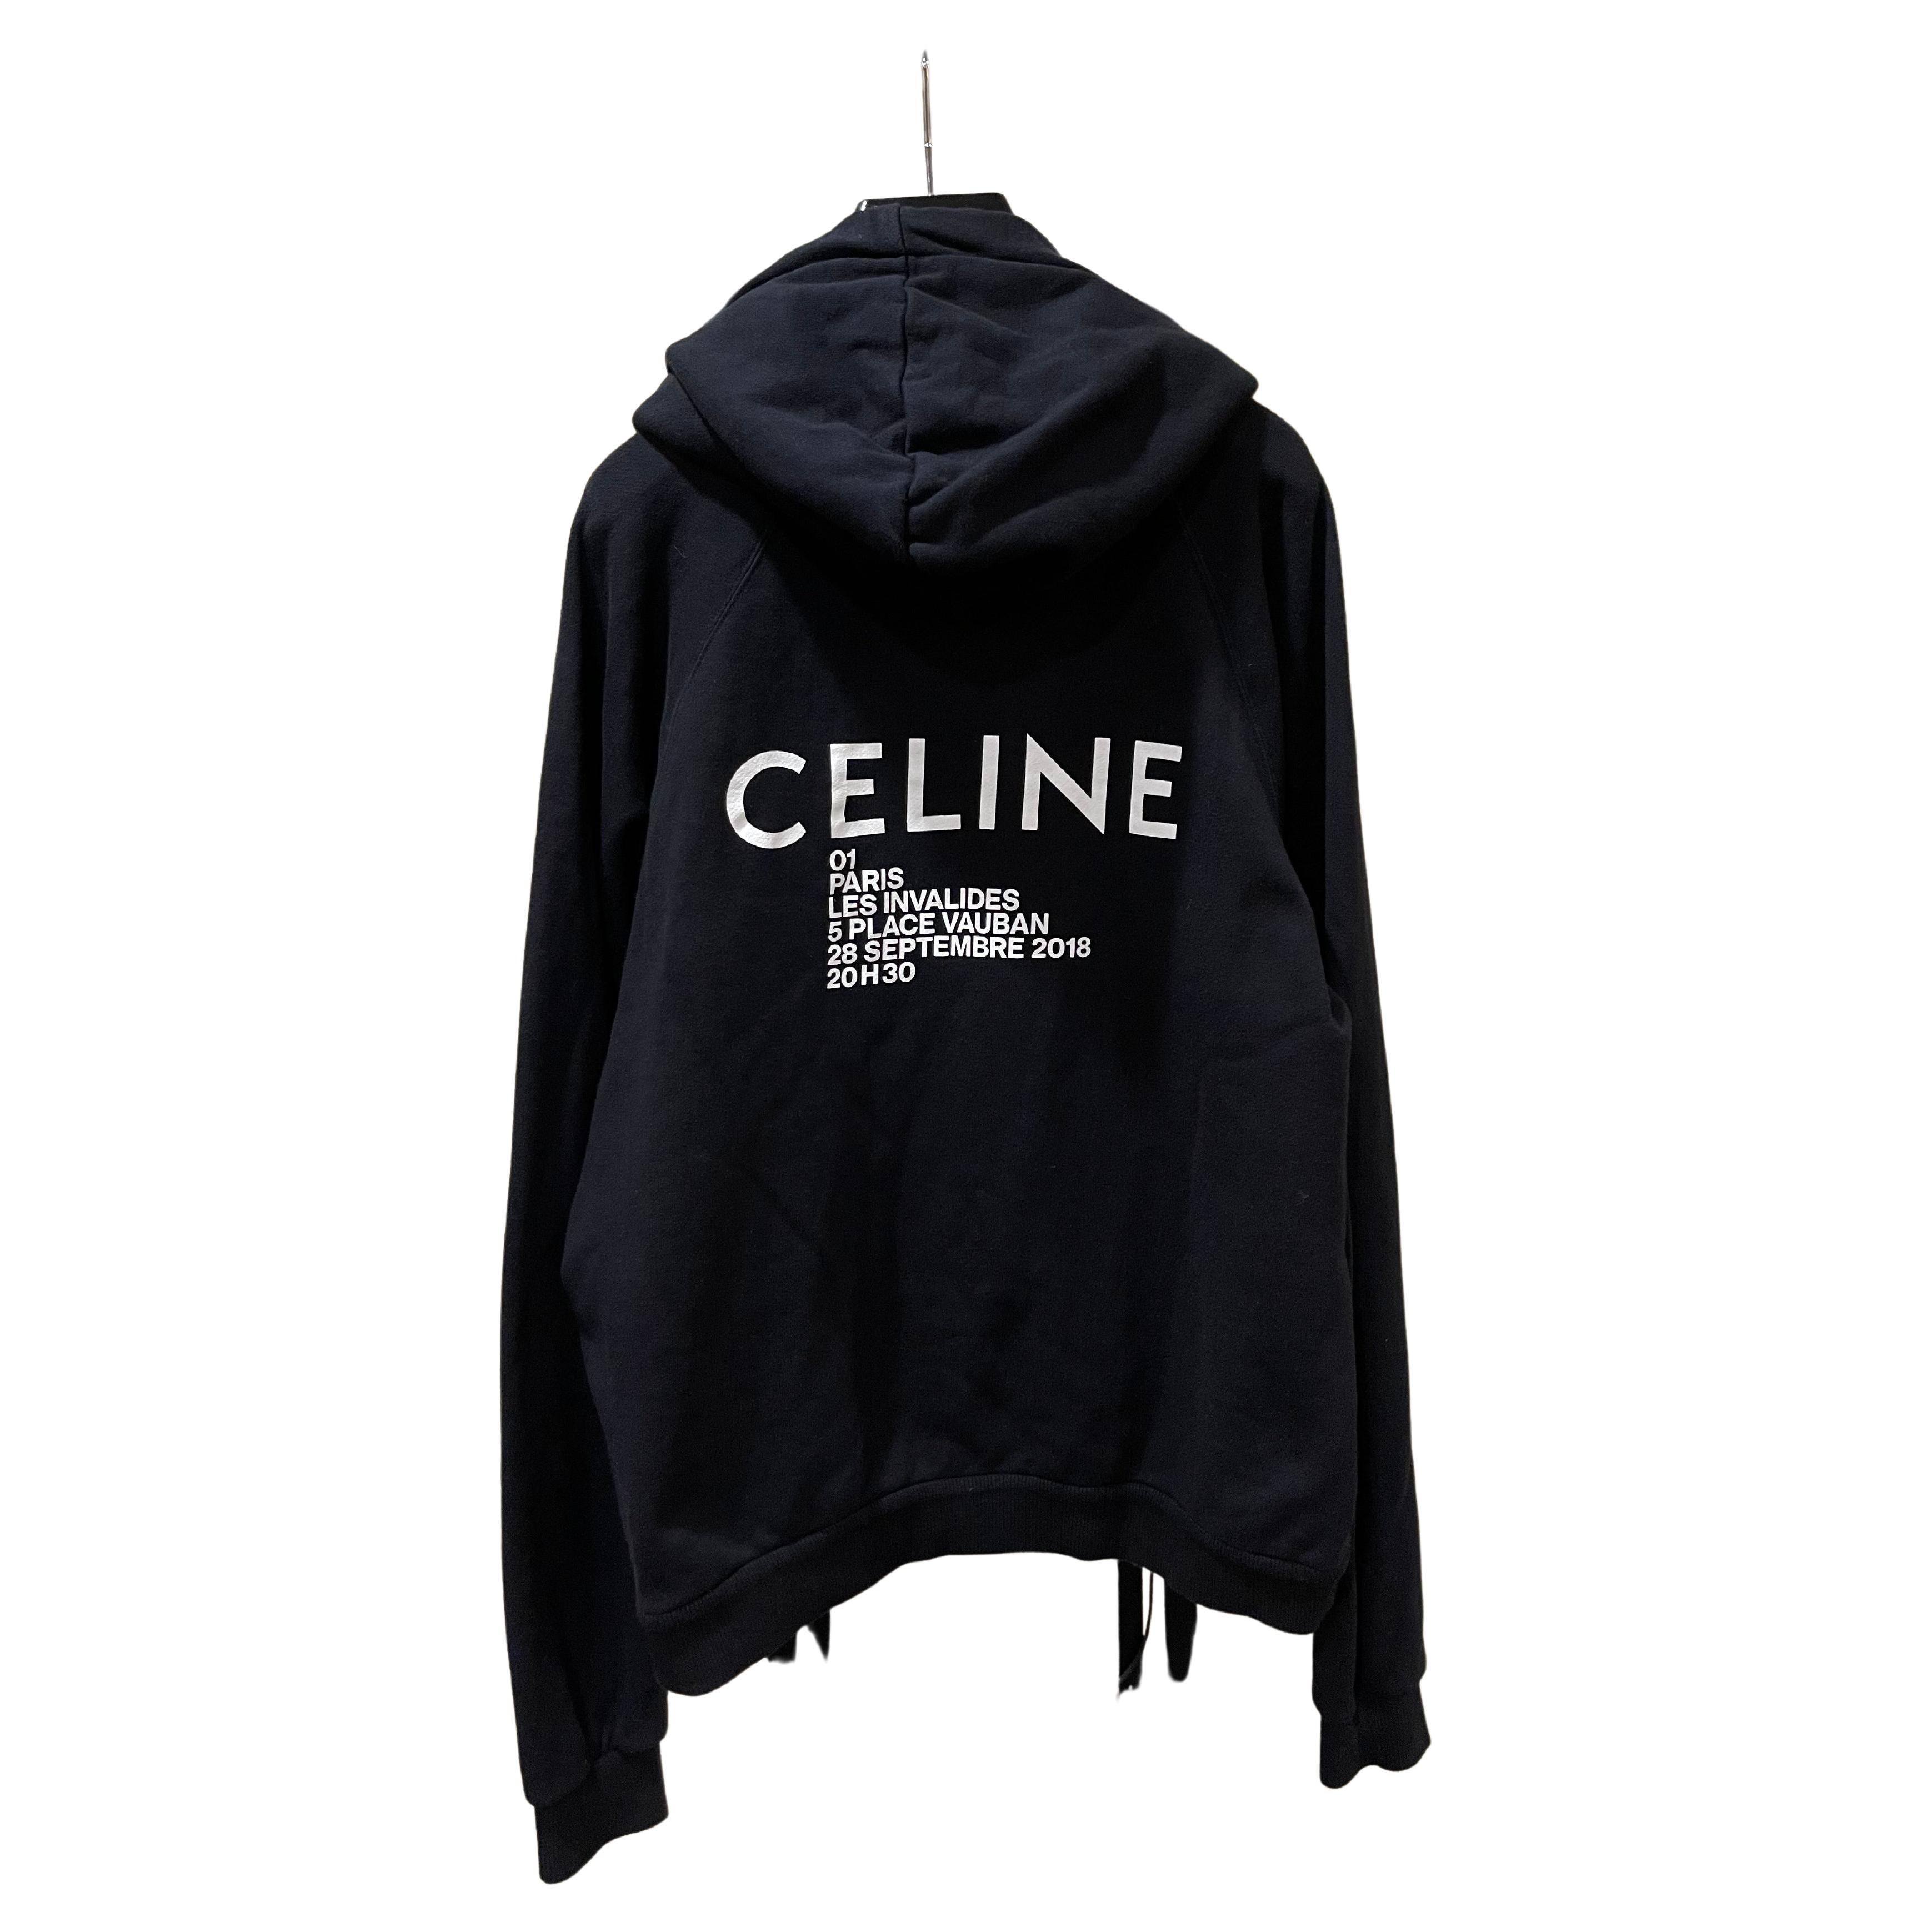 Celine x Hedi Slimane Paris Invitation Logo Black Hoodie